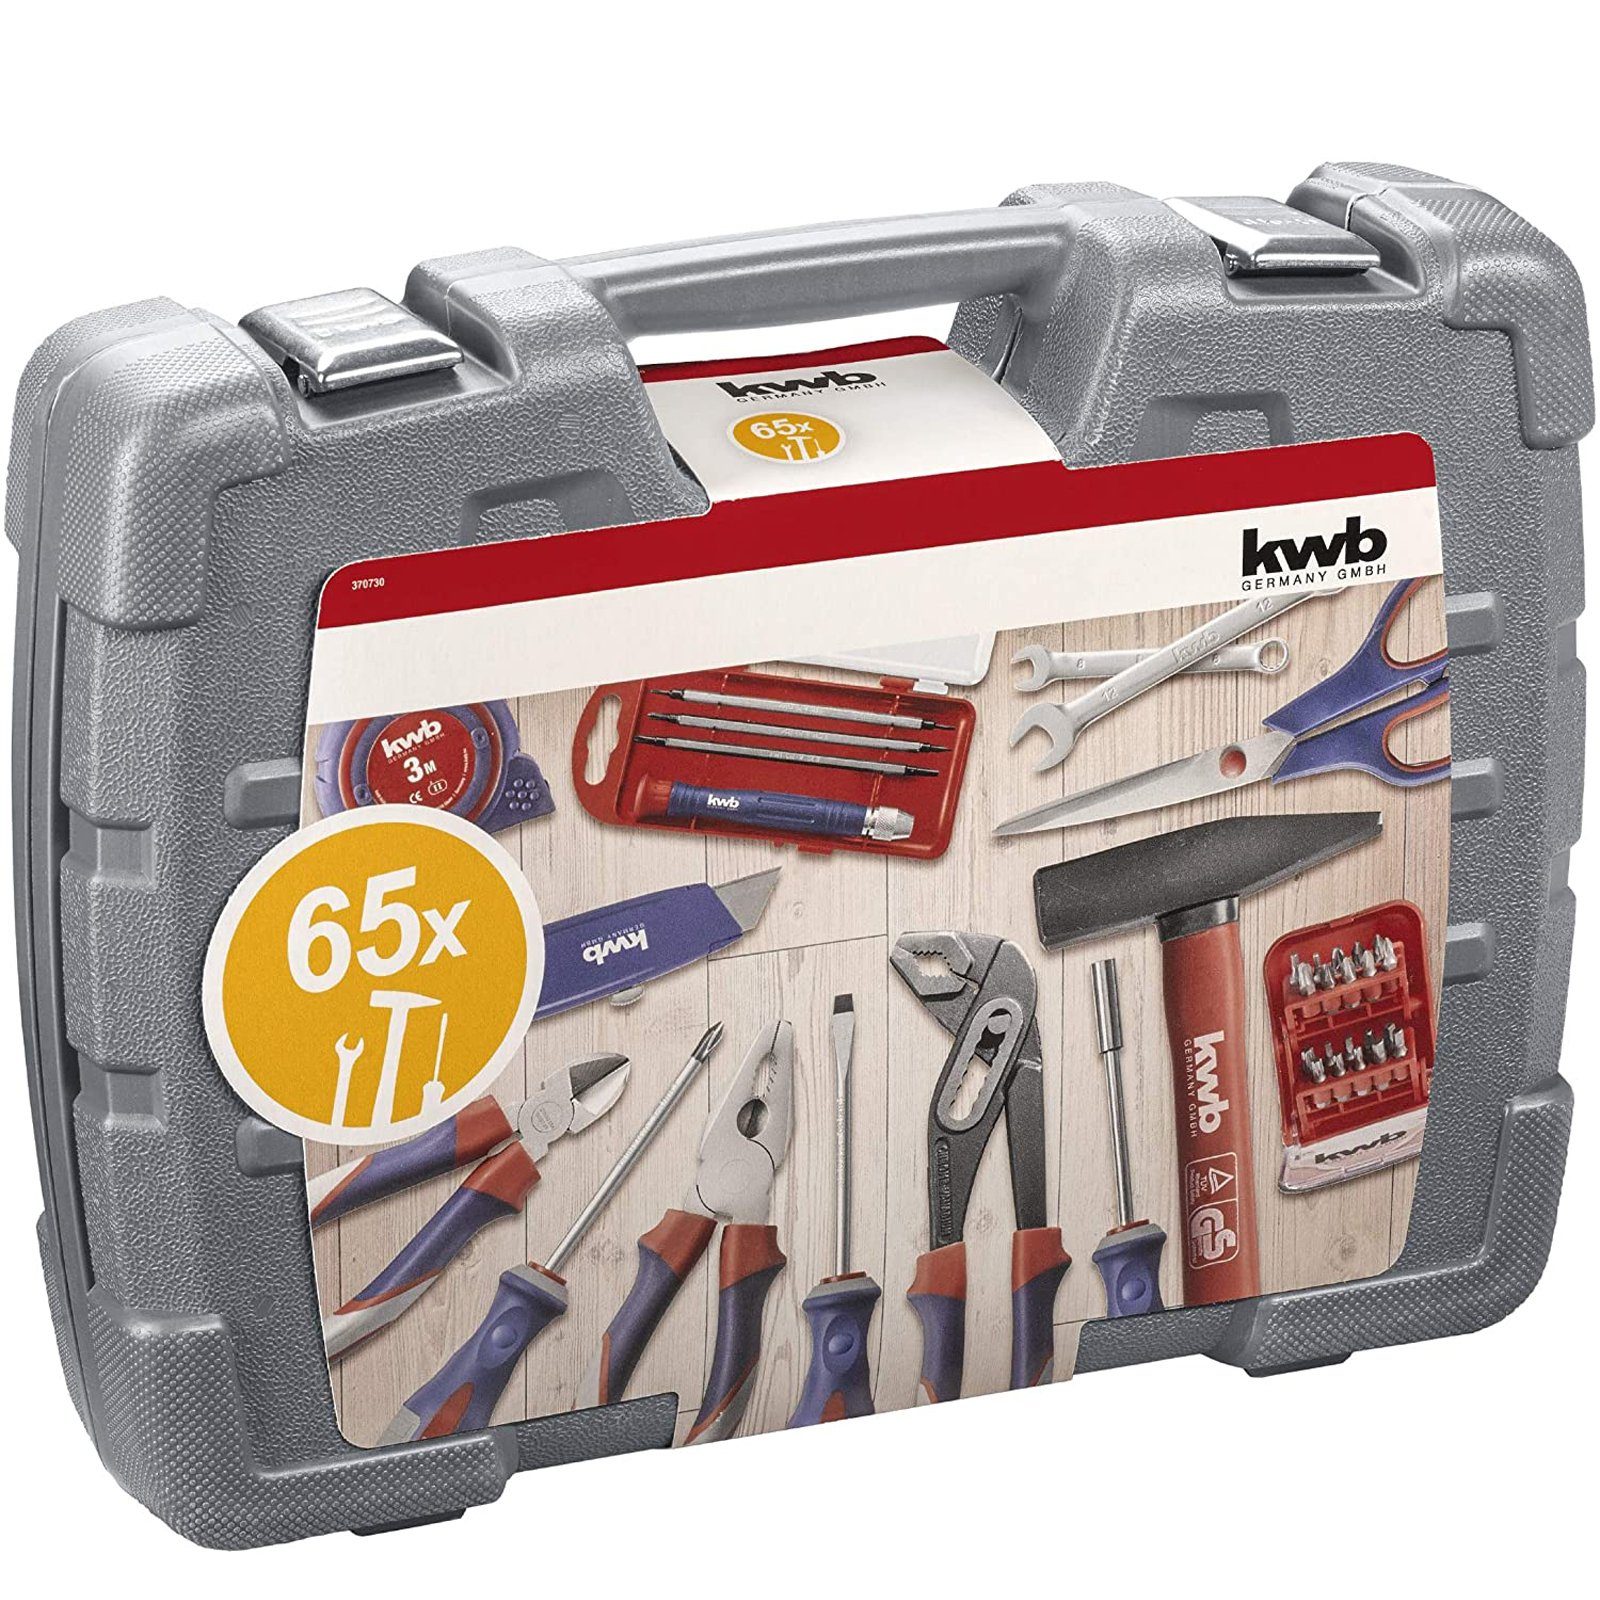 Werkzeugset kwb (Set) Werkzeug-Koffer inkl. gefüllt, kwb 65-teilig, Werkzeug-Set, robust,